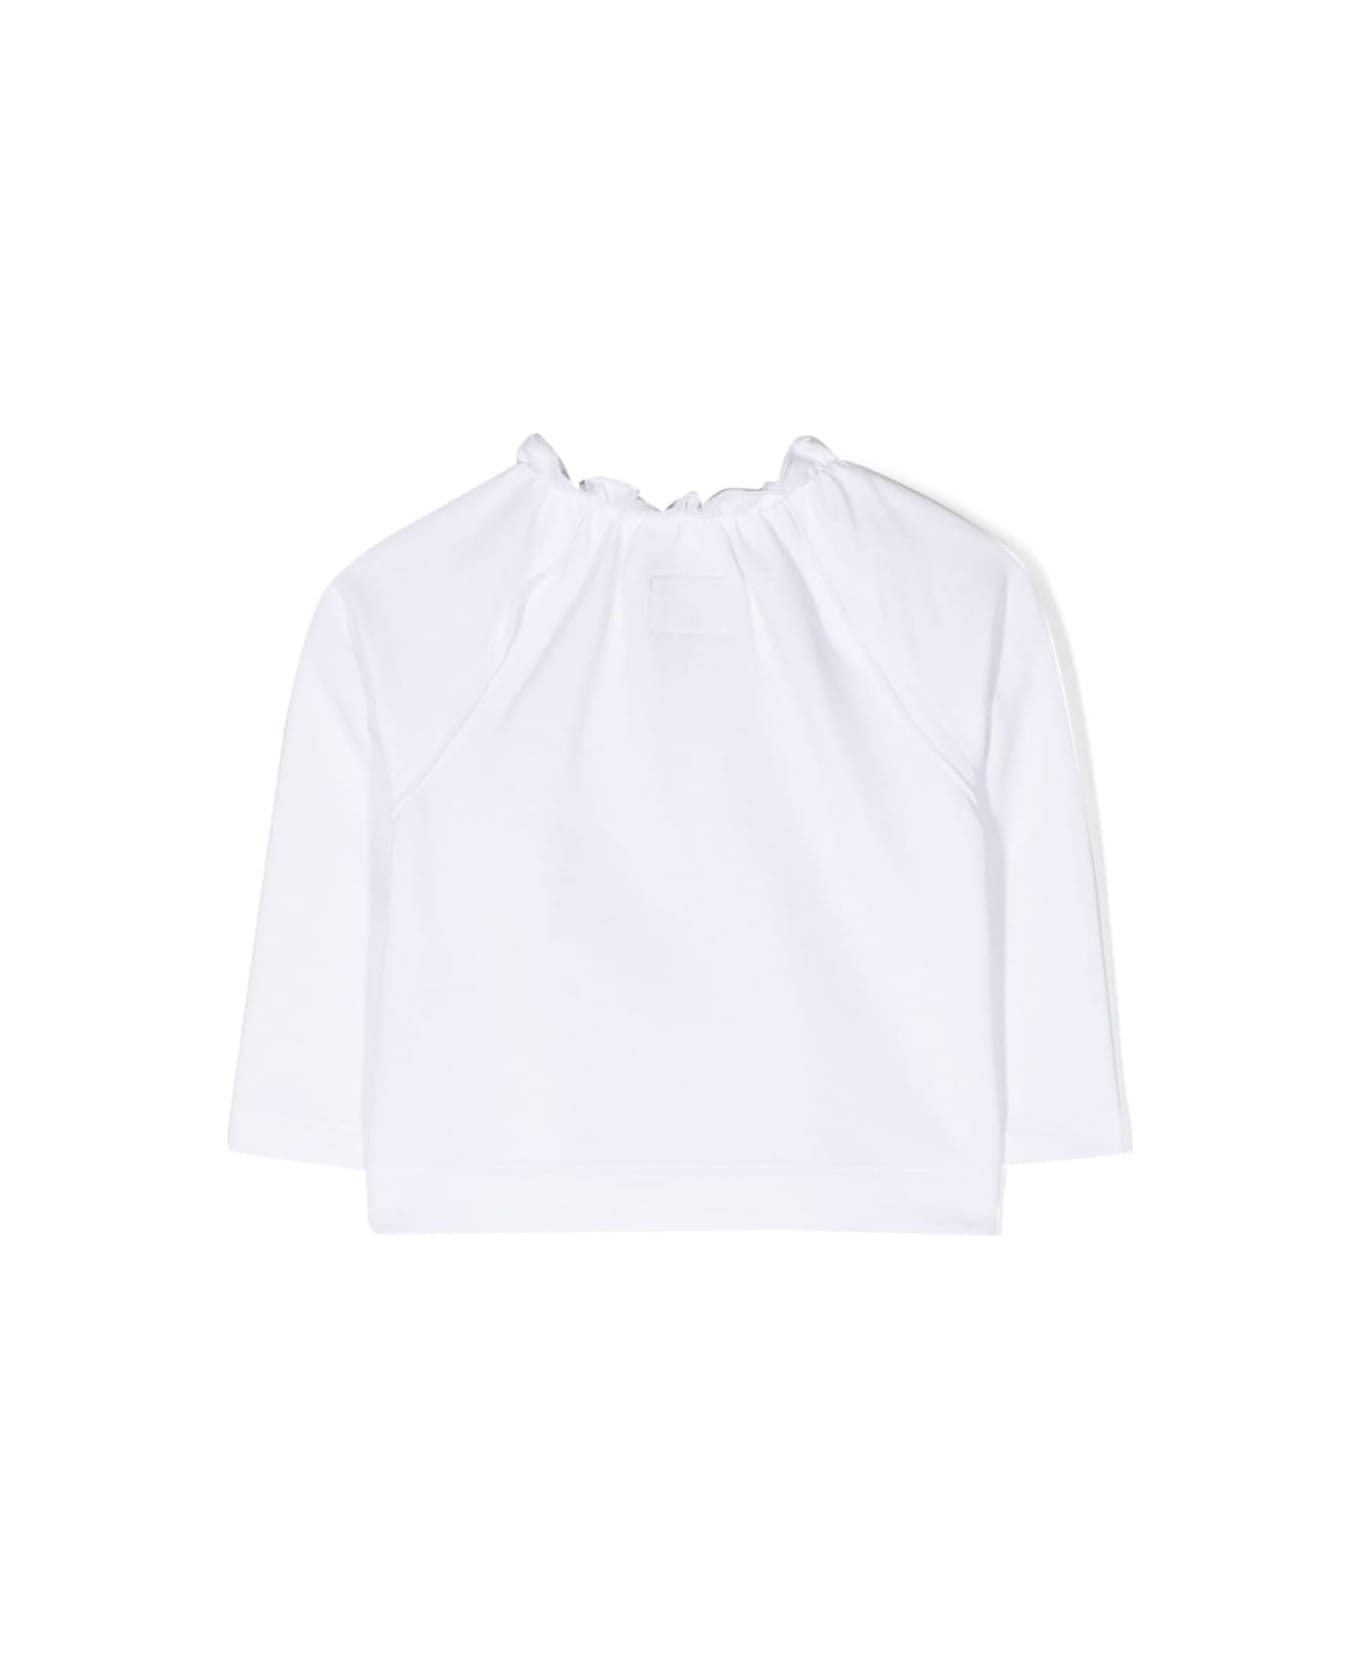 Il Gufo White Sweatshirt With Ruffled Neck In Cotton Baby - White